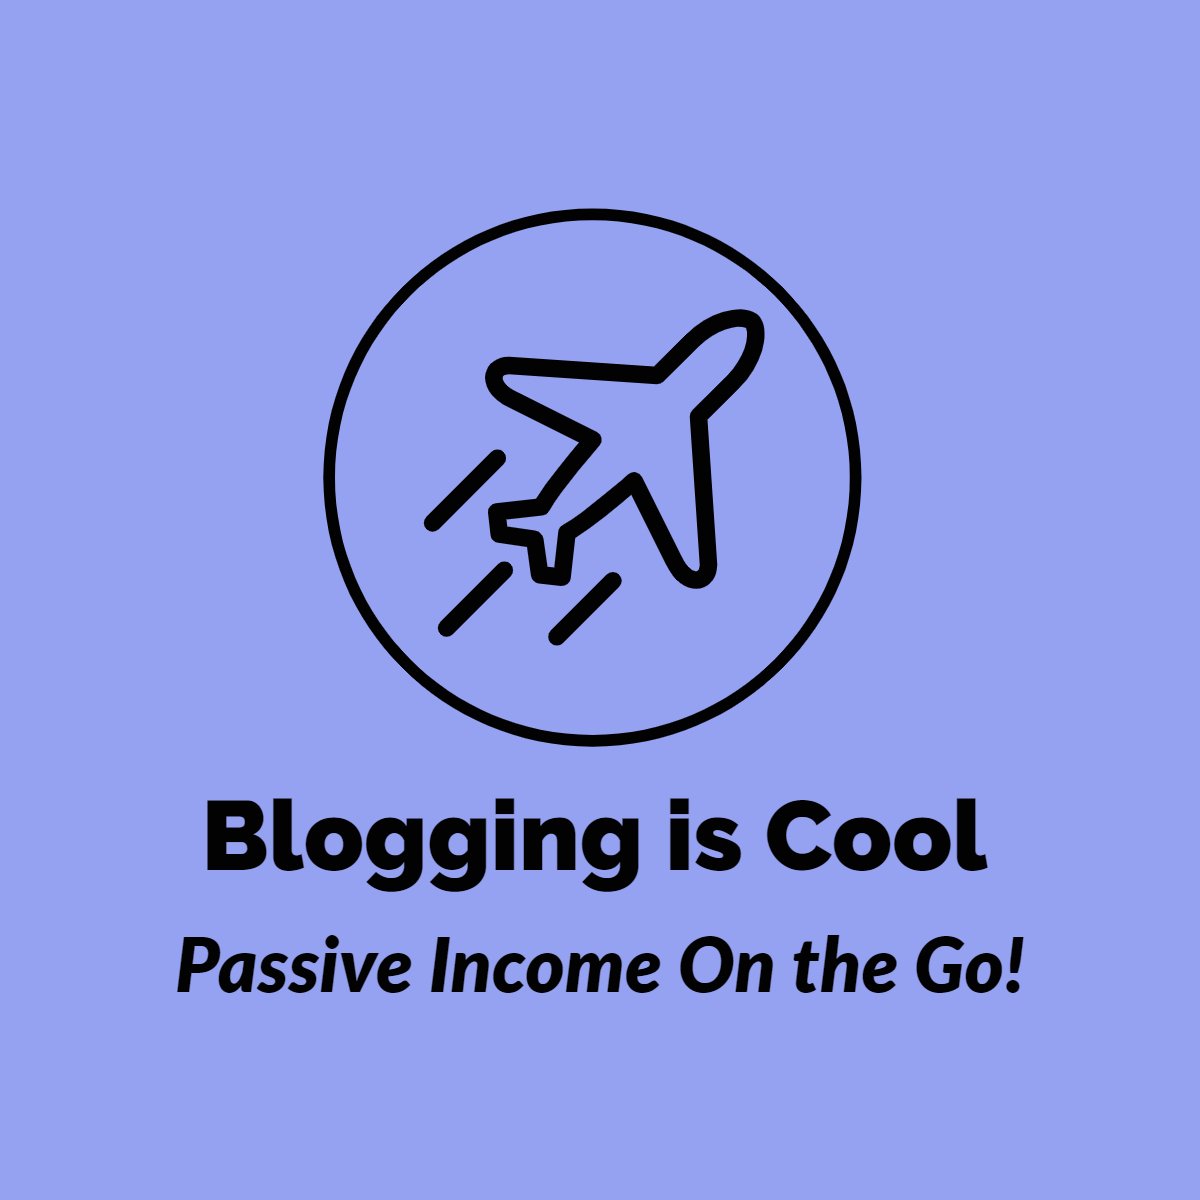 bloggingiscool.com keyword optimization for growth